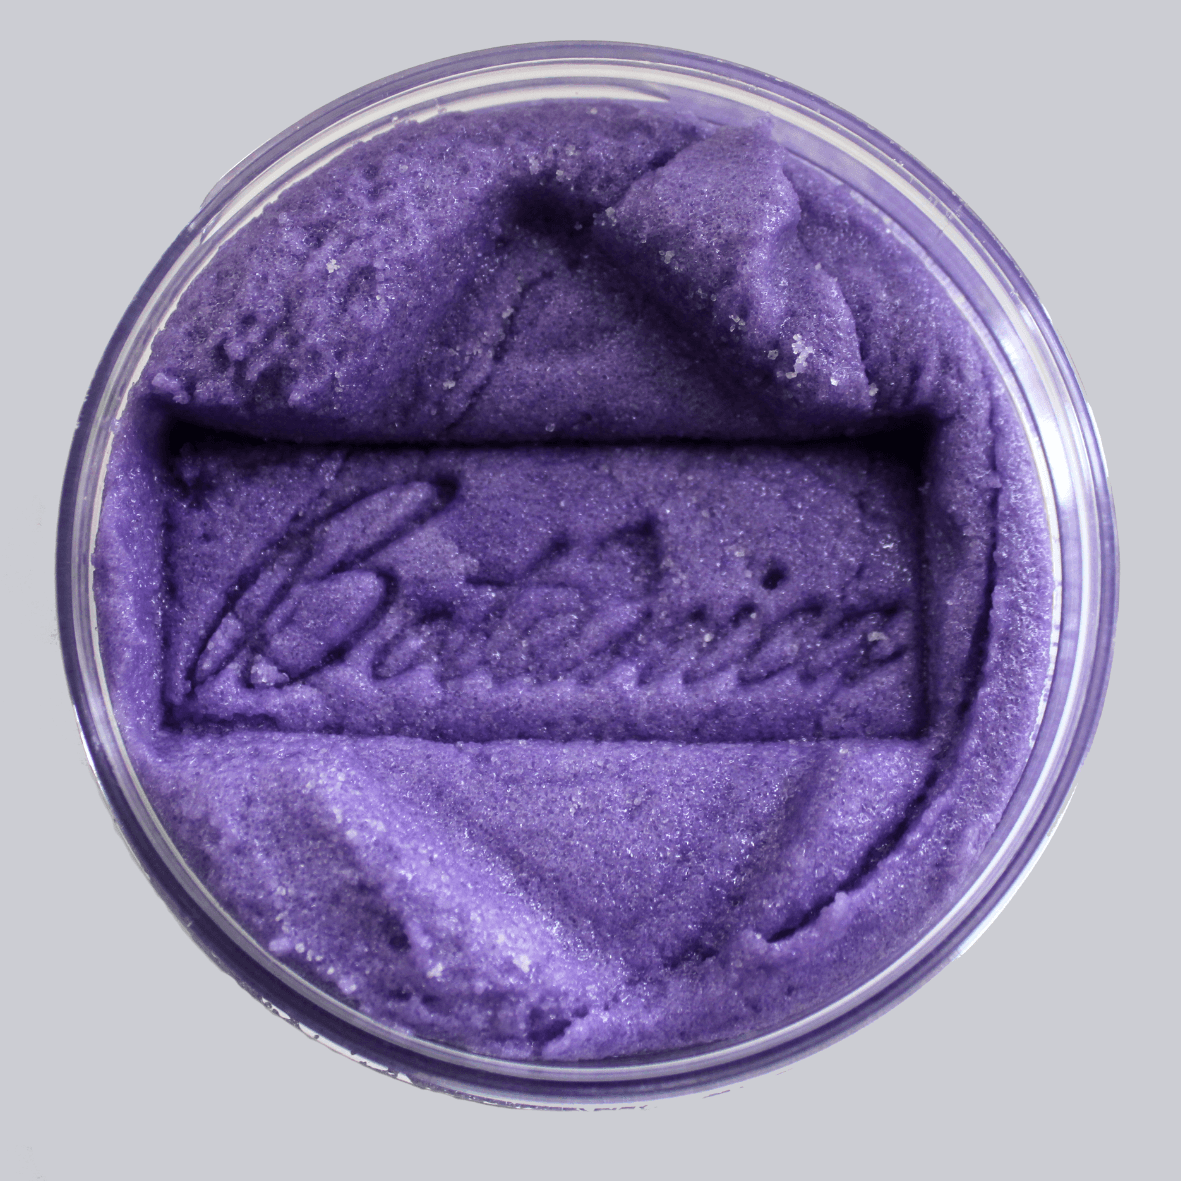 Open jar of sugar body scrub showing the texture, stamped "Botanica" AlpacaSoaps Alpaca Soaps, Purple, Lavender